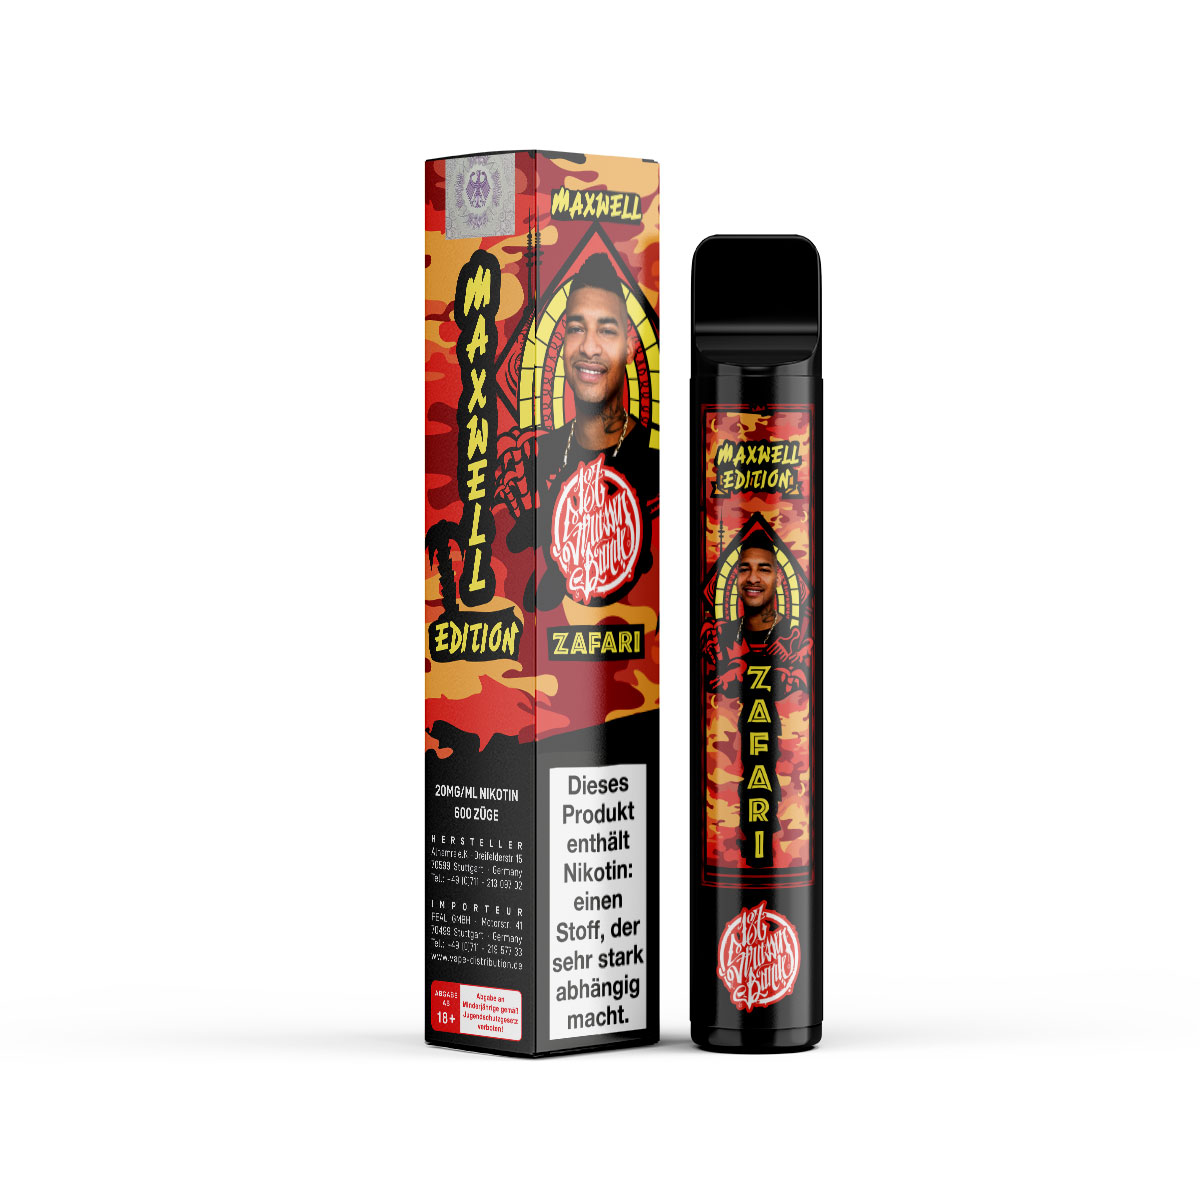 187 Strassenbande Zafari Maxwell Edition Einweg E-Zigarette 20mg/ml